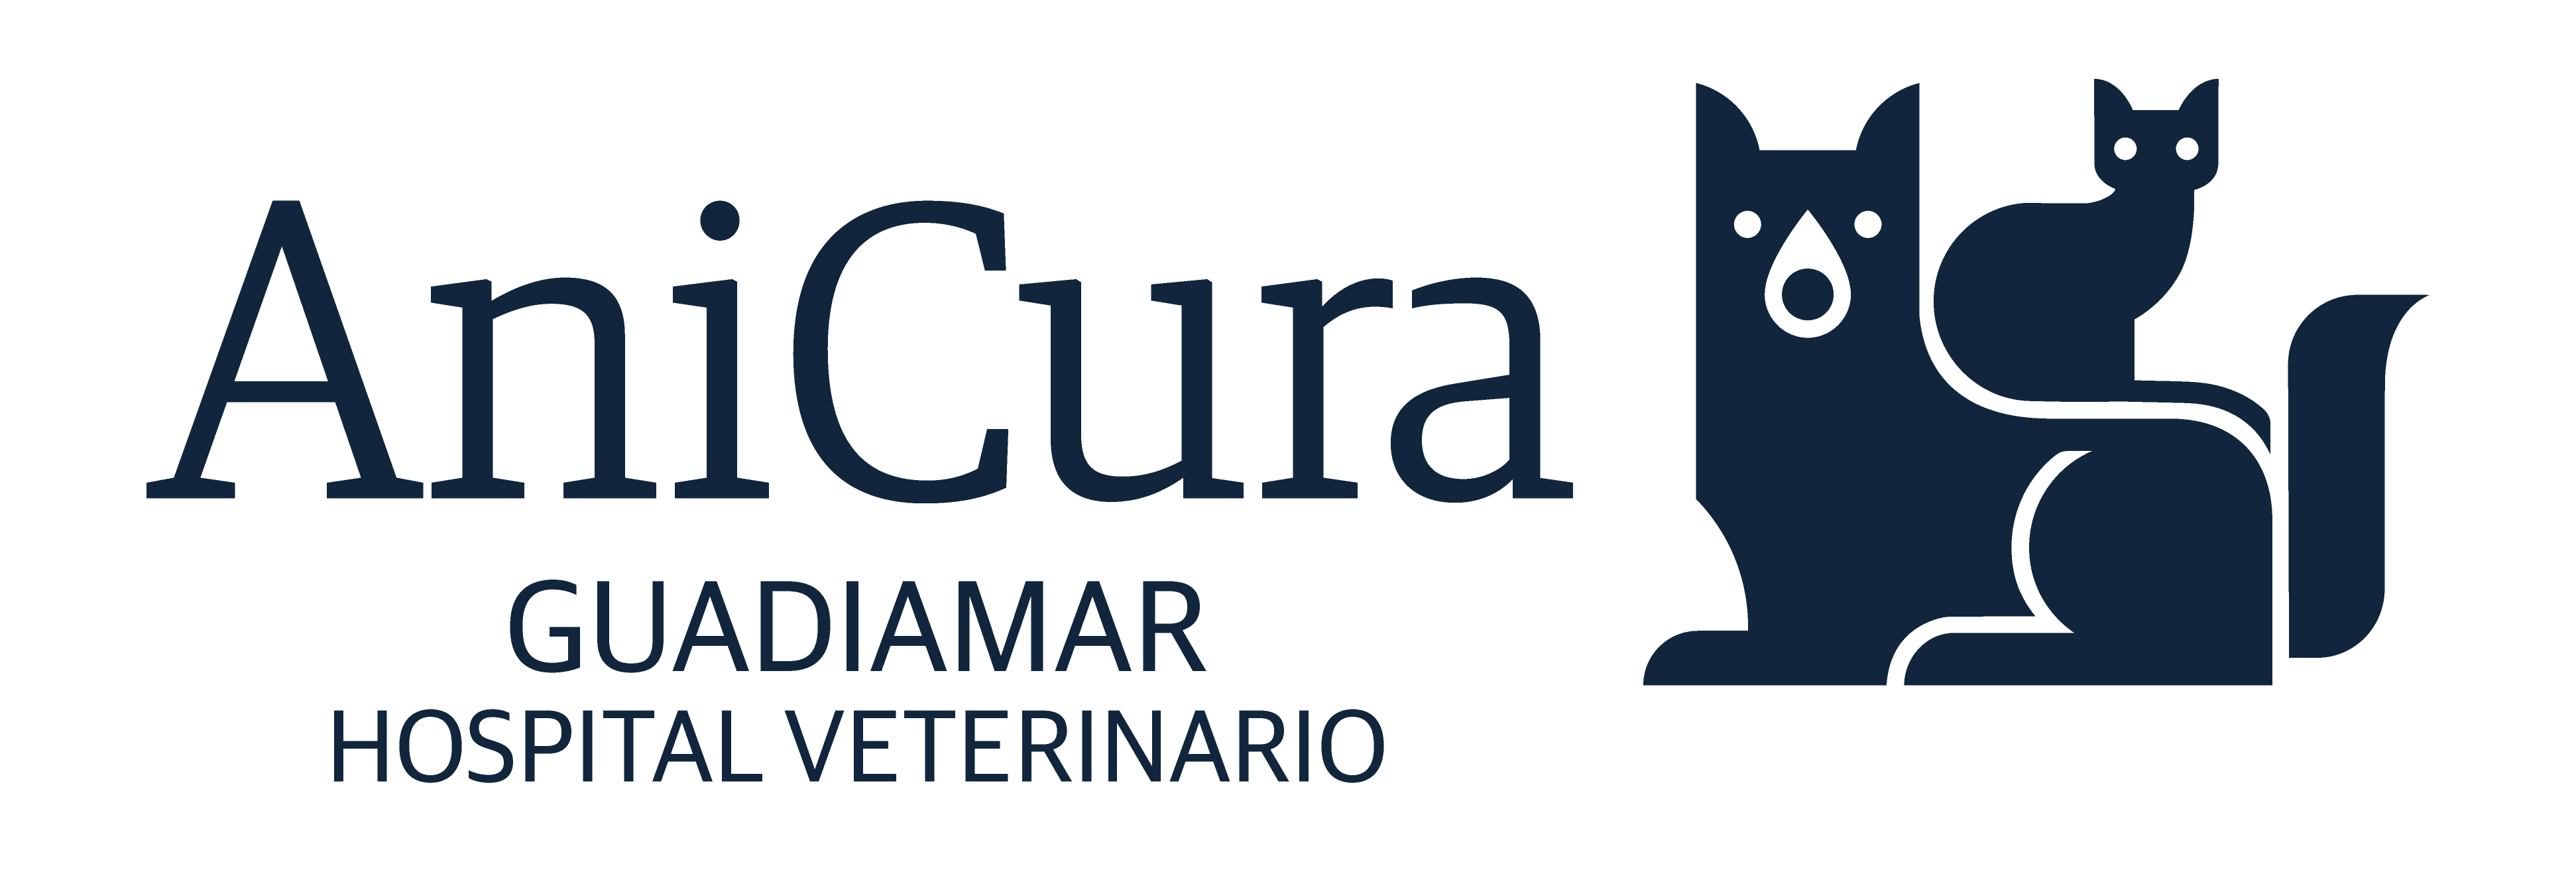 AniCura Guadiamar Hospital Veterinario logo